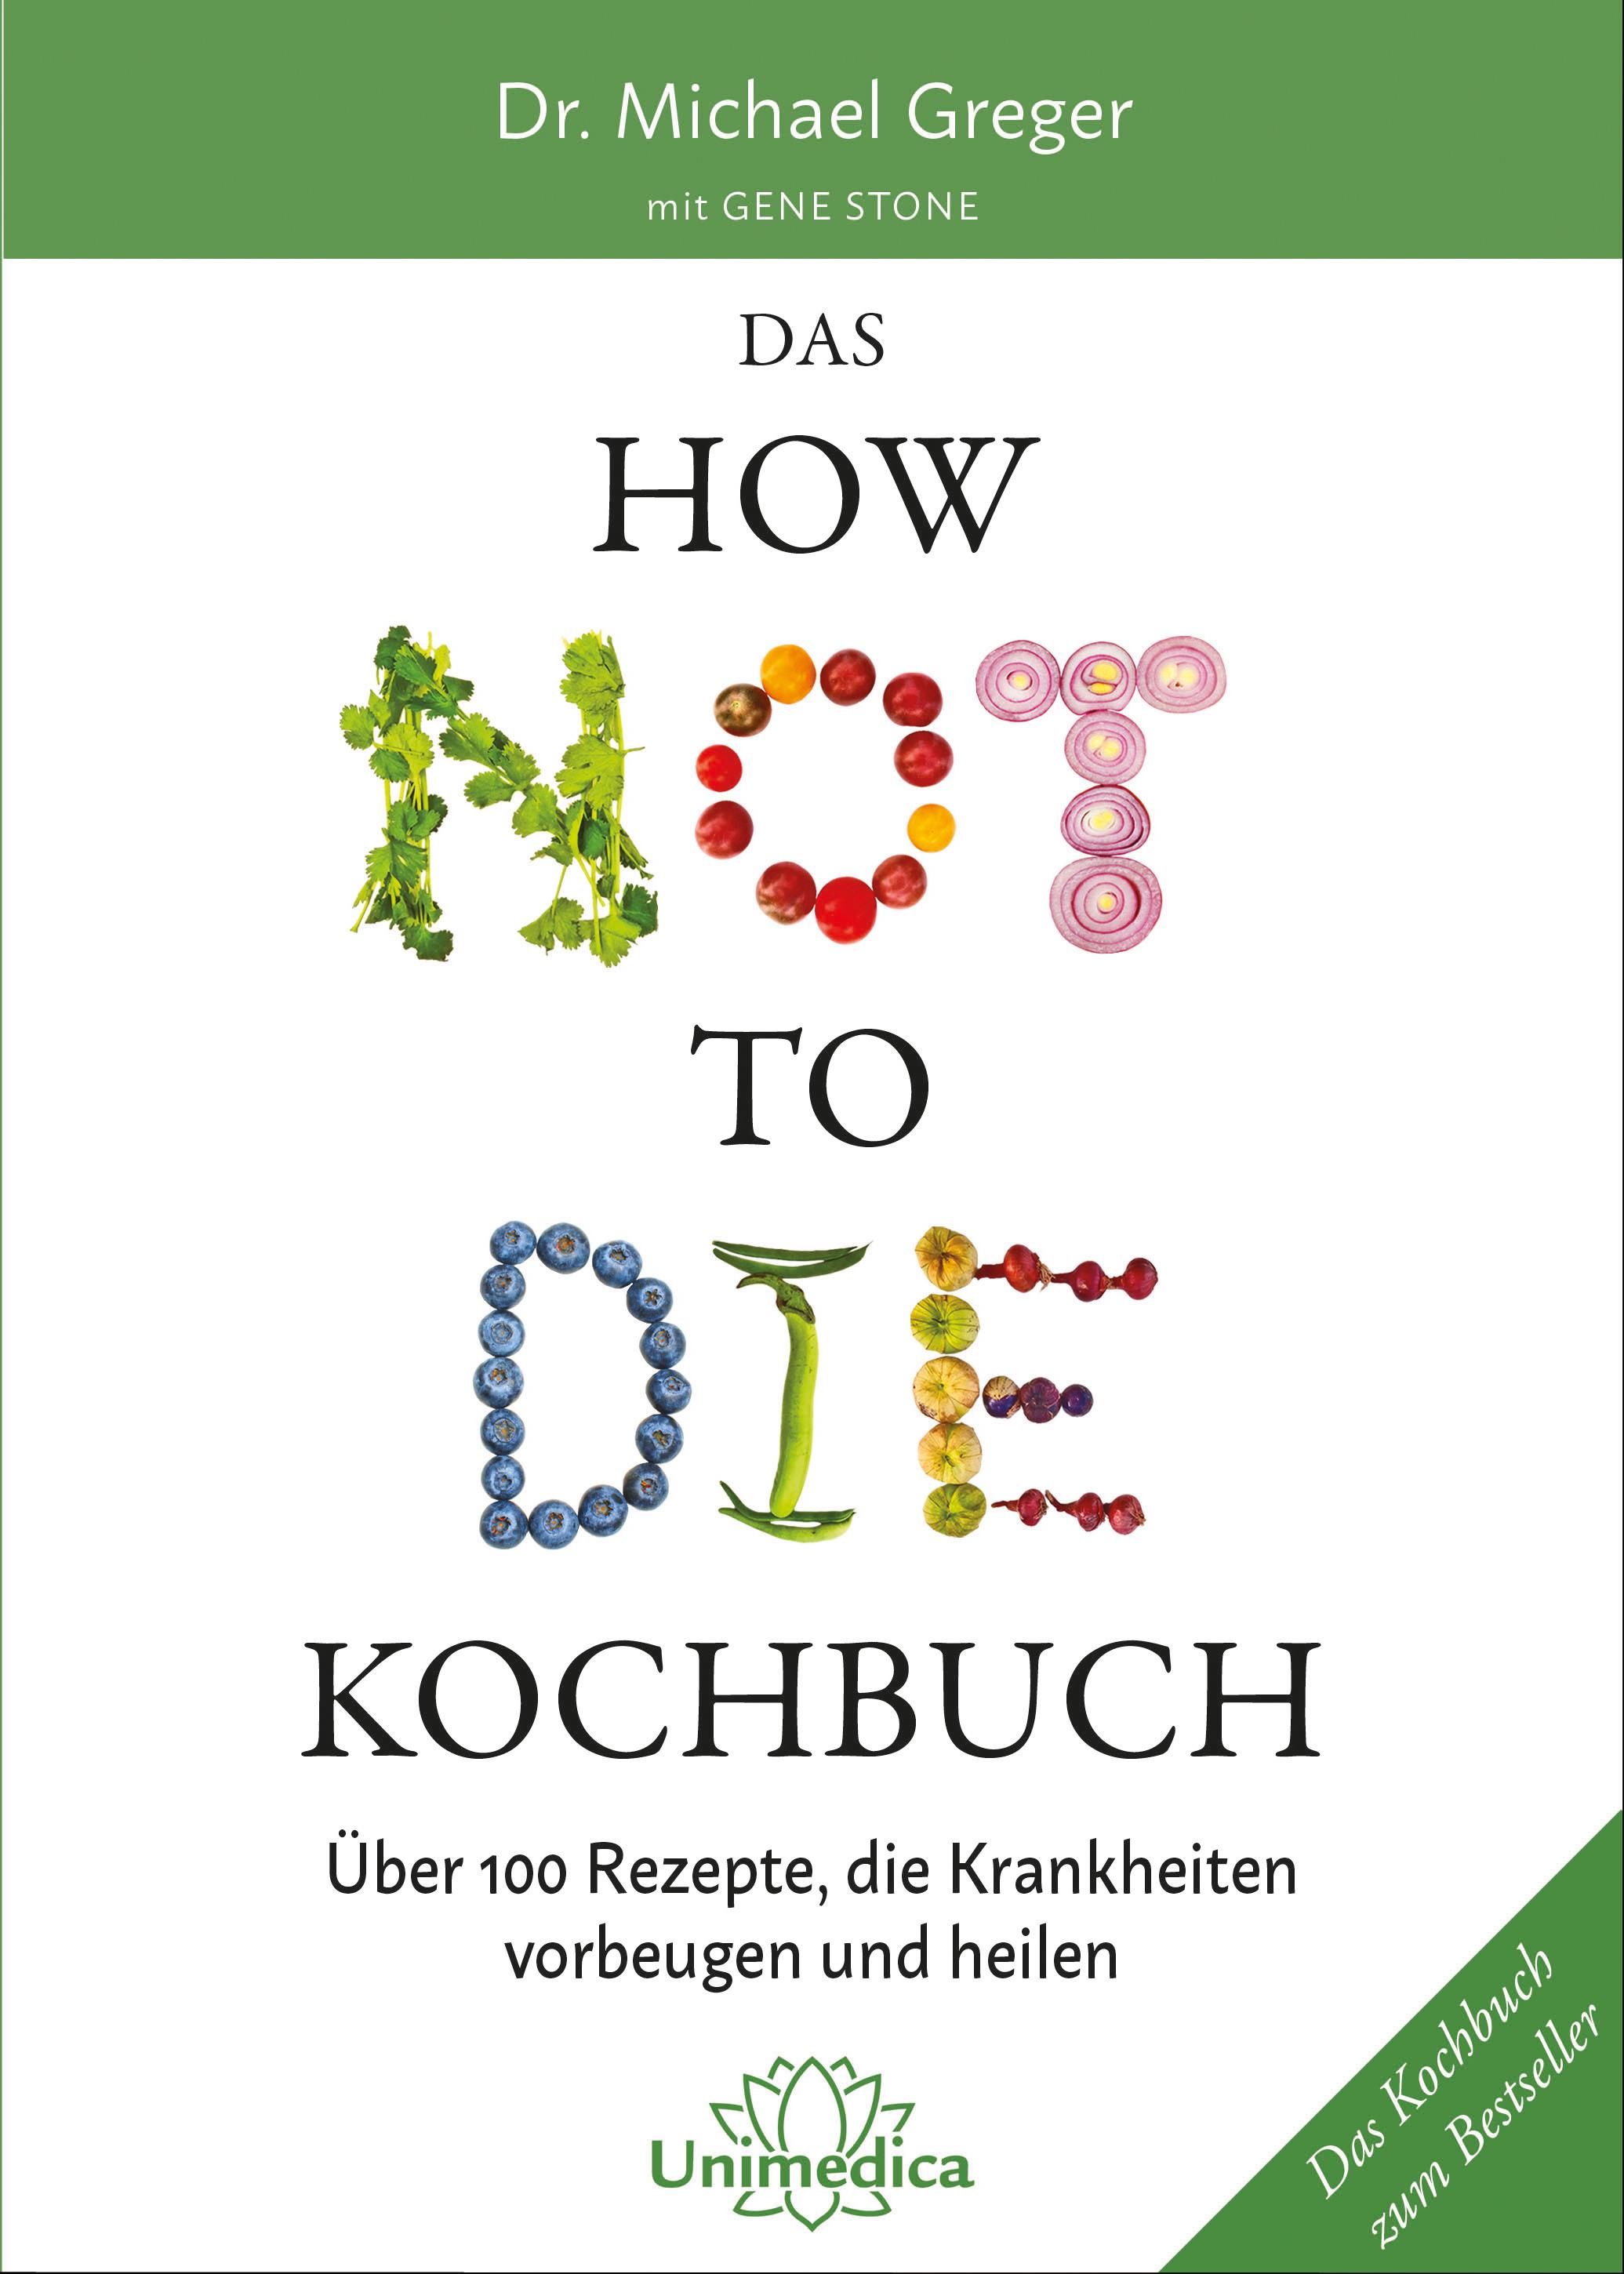 Das HOW NOT TO DIE Kochbuch